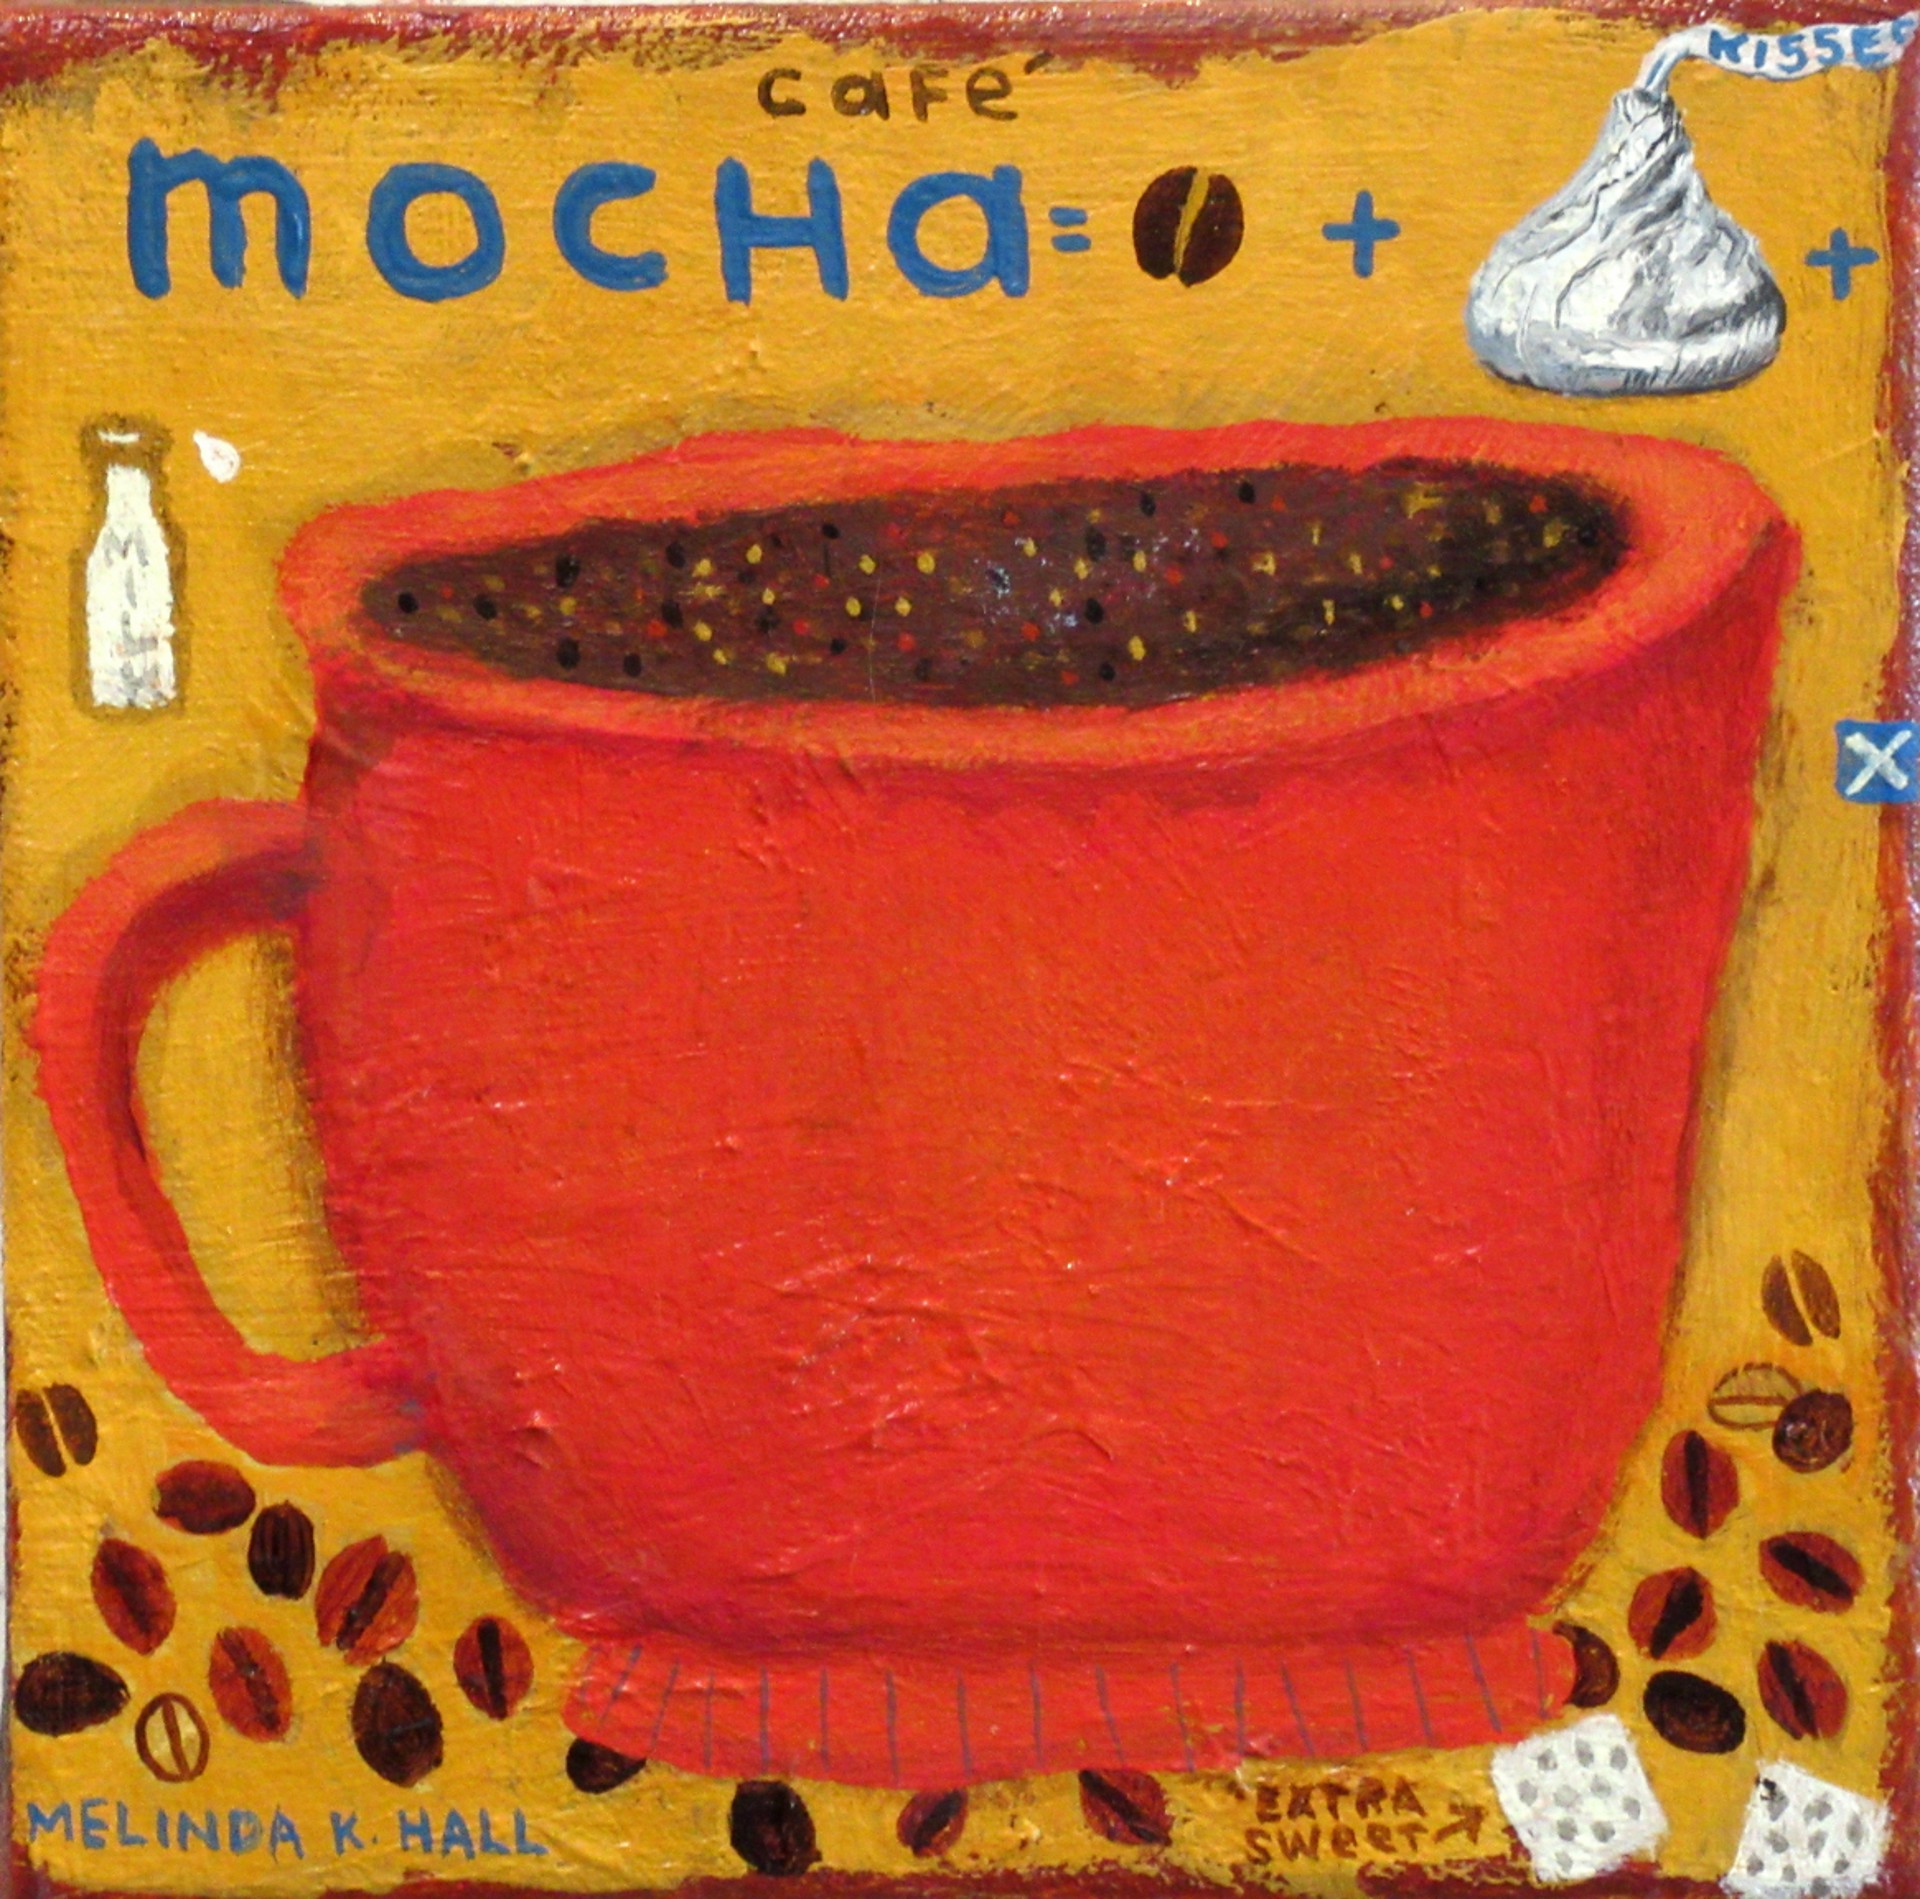 Cafe' Mocha by Melinda K. Hall